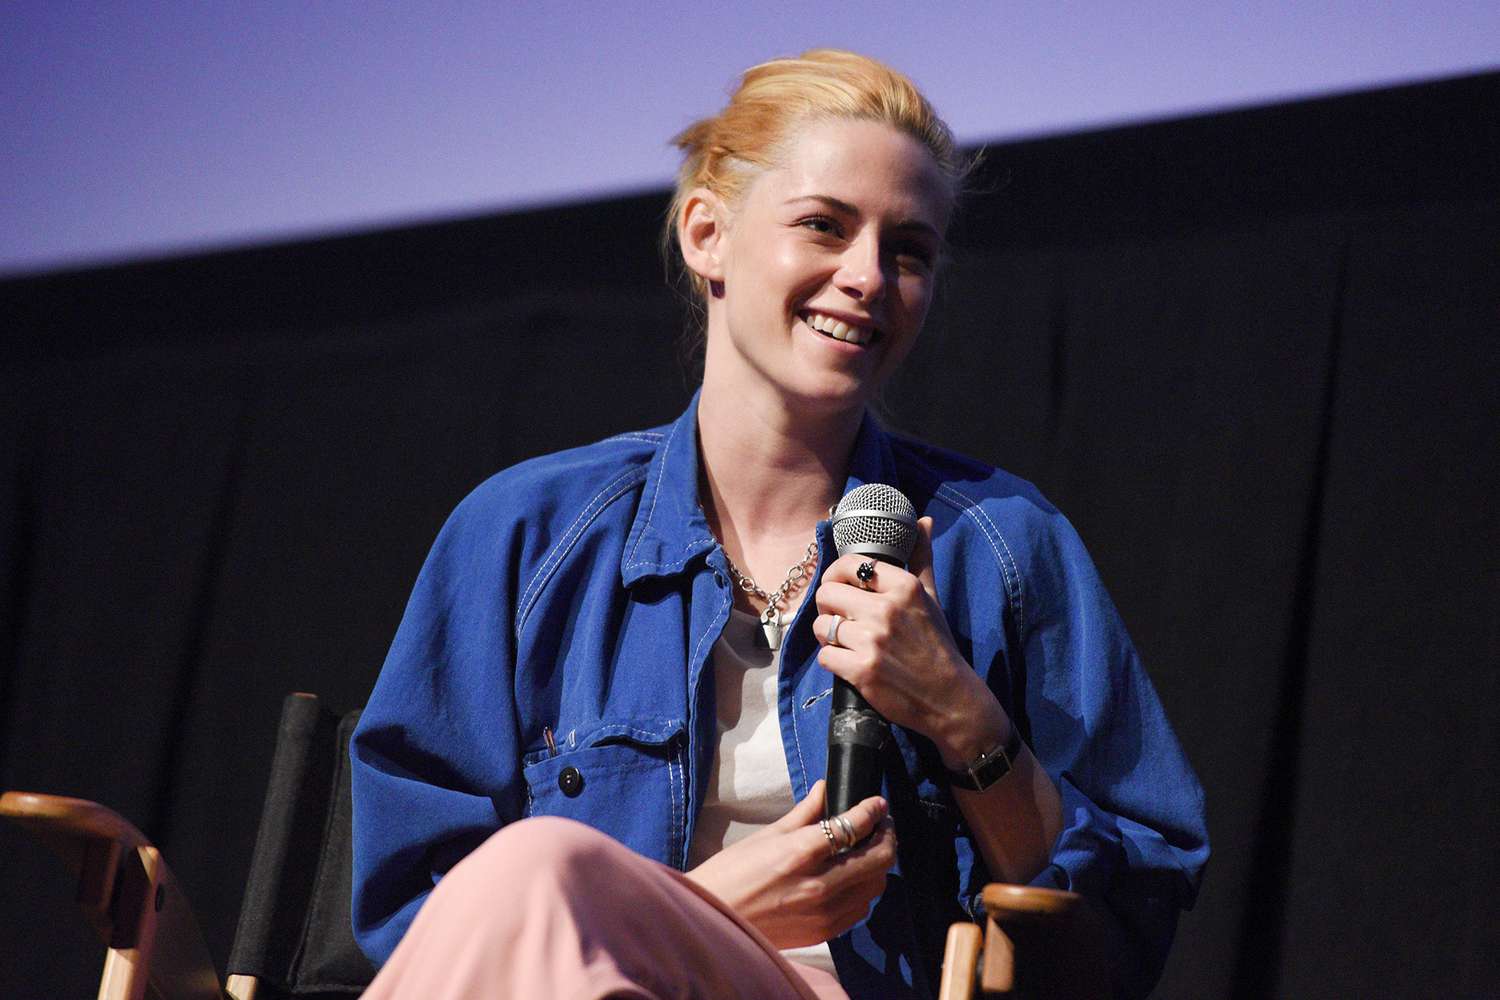 Kristen Stewart speaks on stage after a screening of "Spencer" at the Telluride Film Festival on September 06, 2021 in Telluride, Colorado